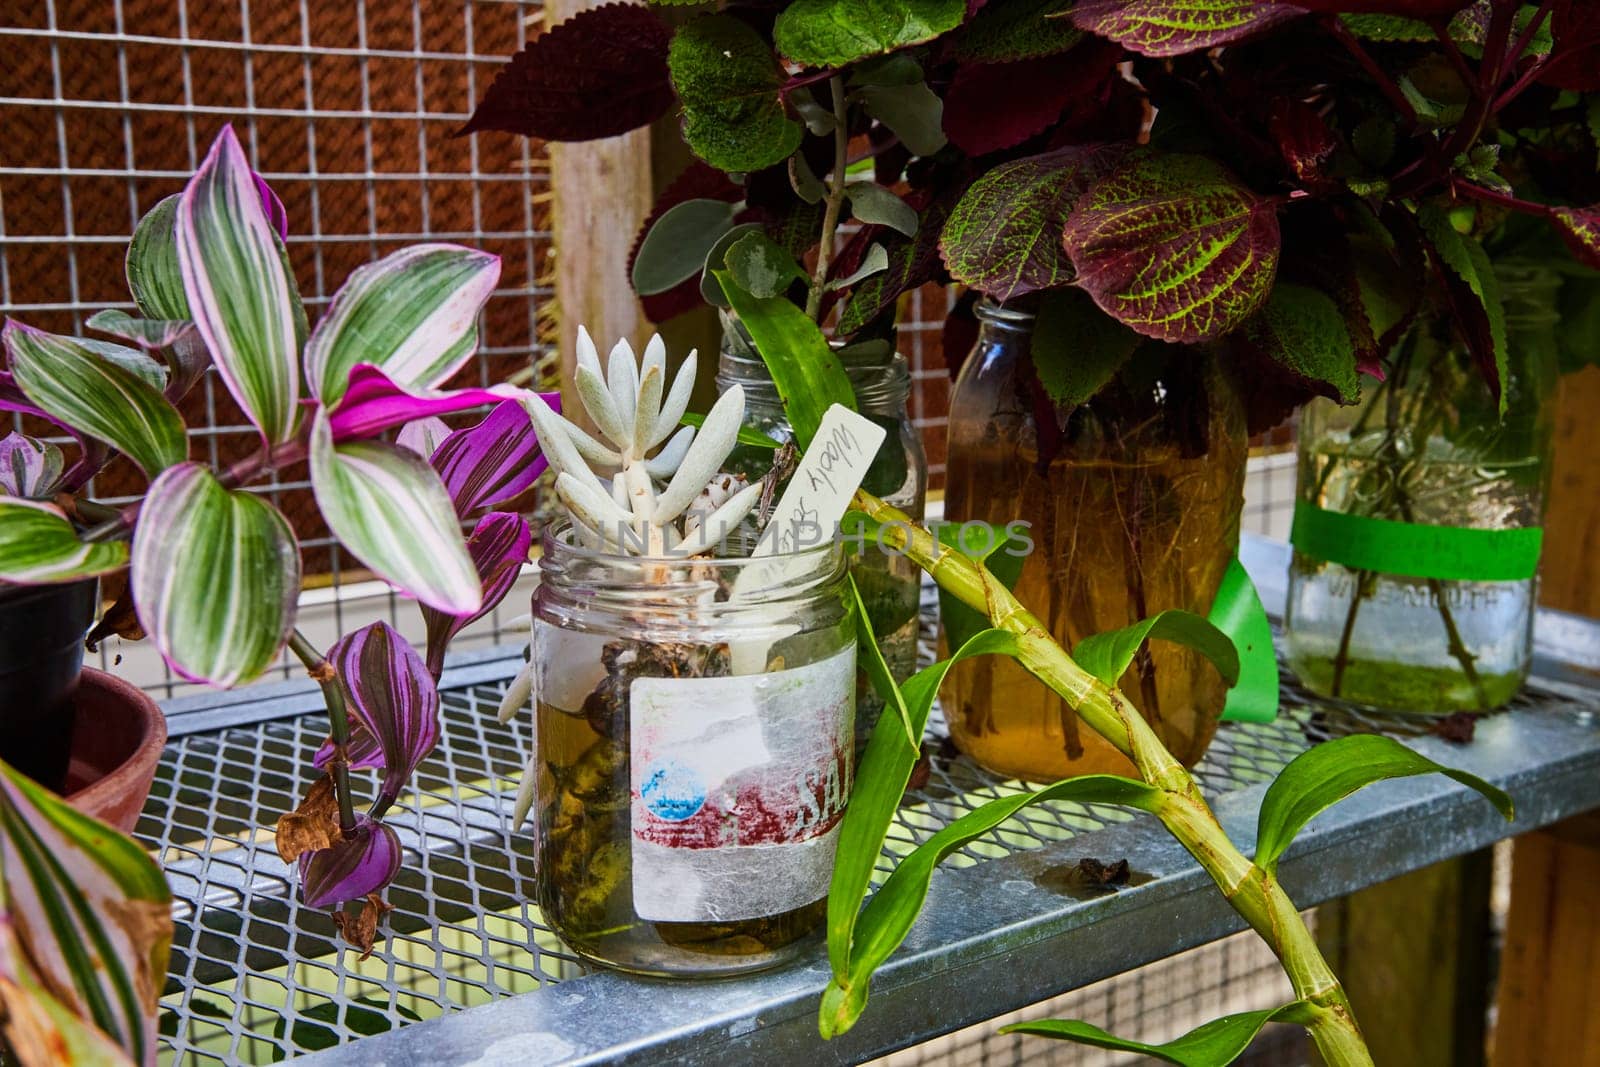 Variegated Houseplants on Metal Shelf, Urban Gardening Perspective by njproductions